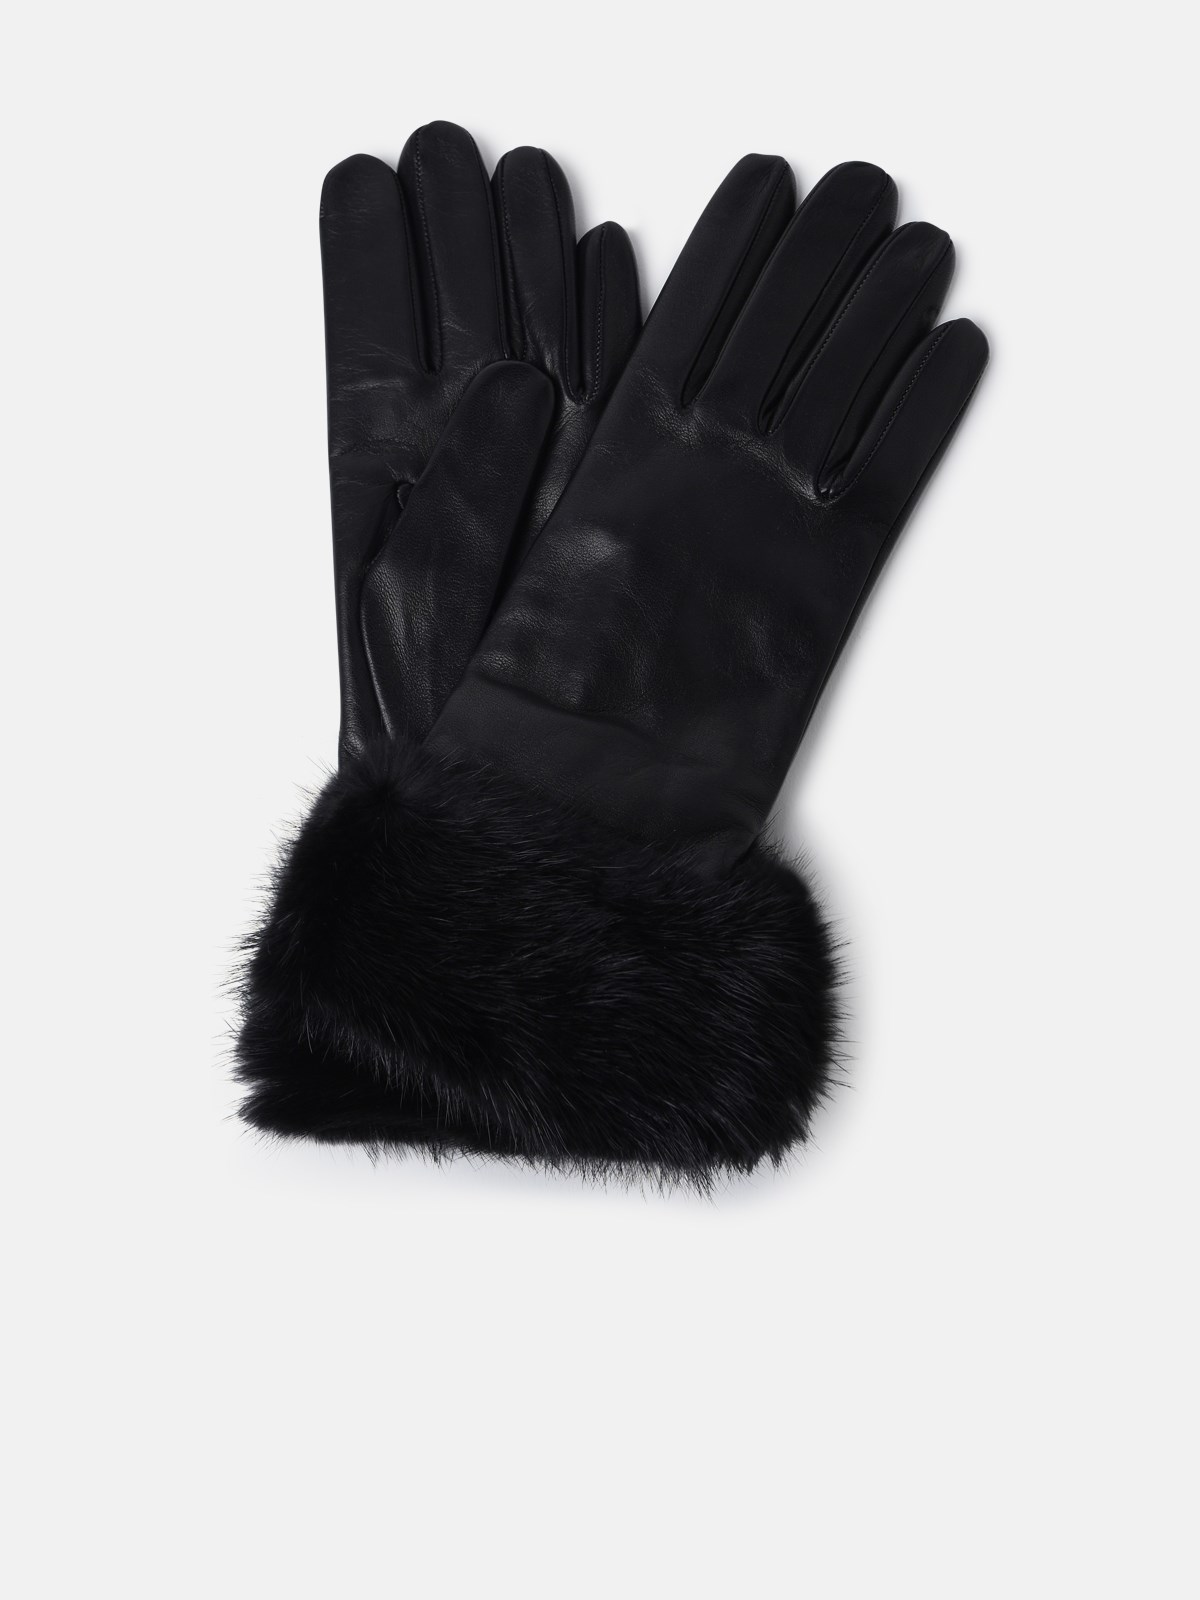 Sofia Gants Black Nappa Leather Gloves